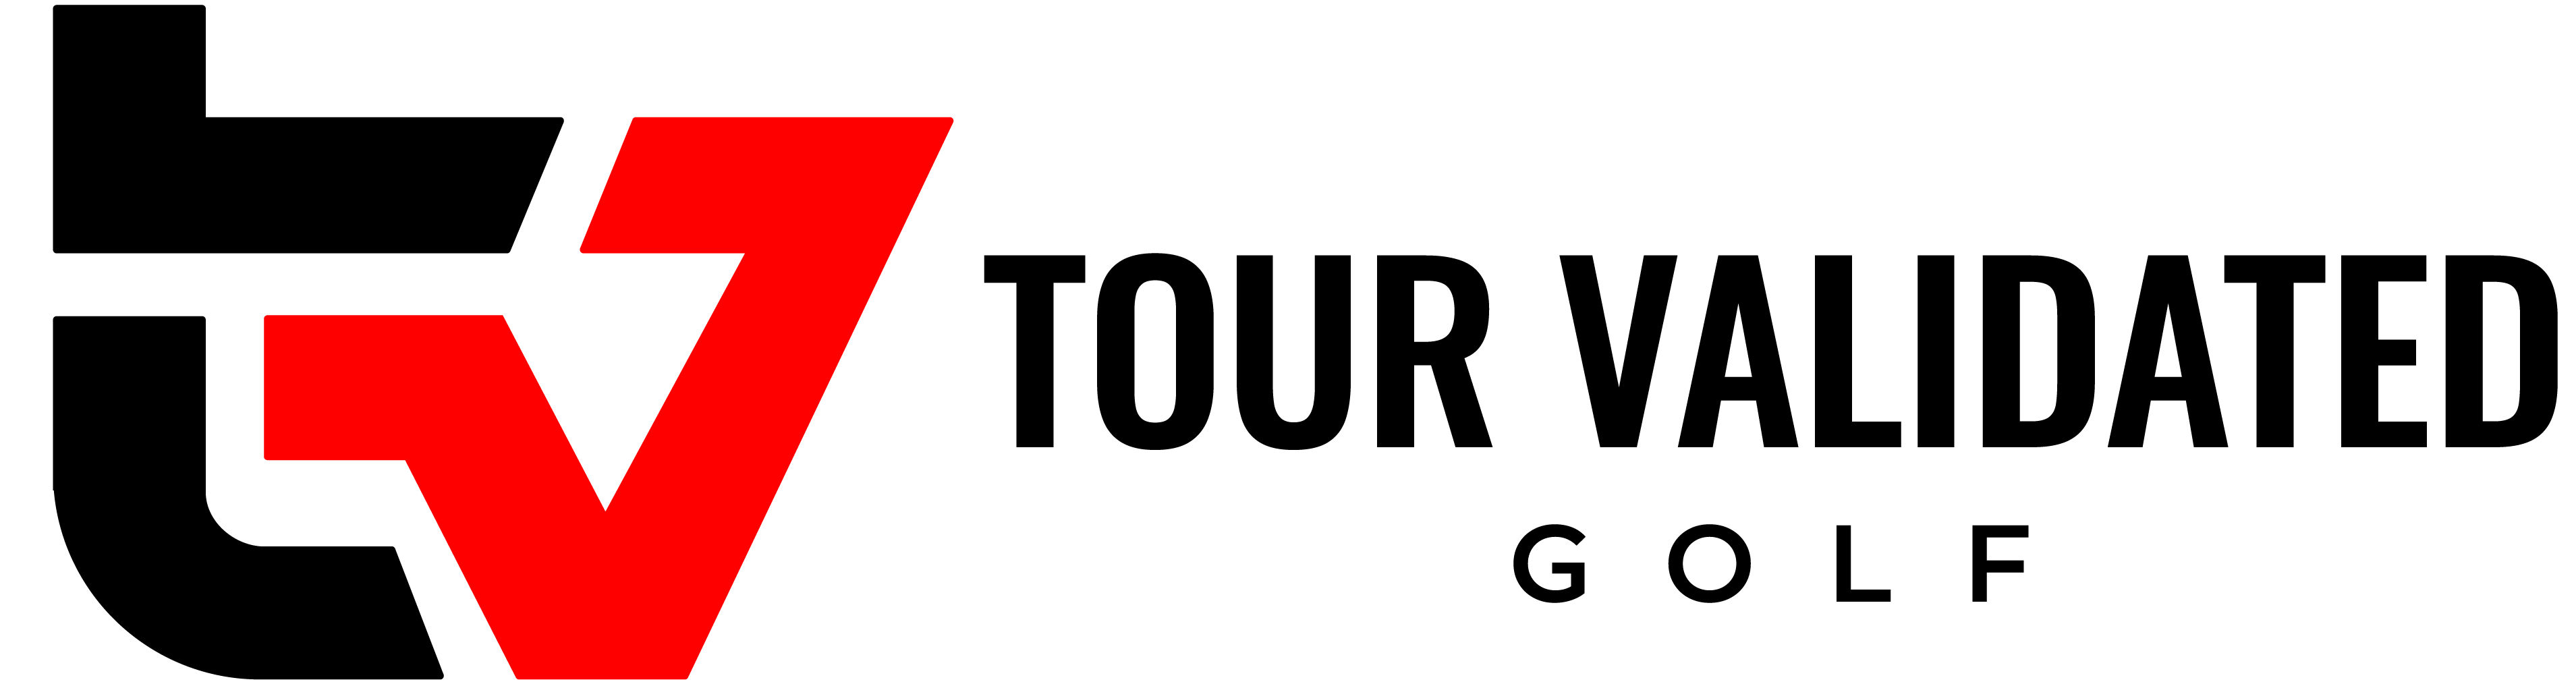 Tour Validated logo